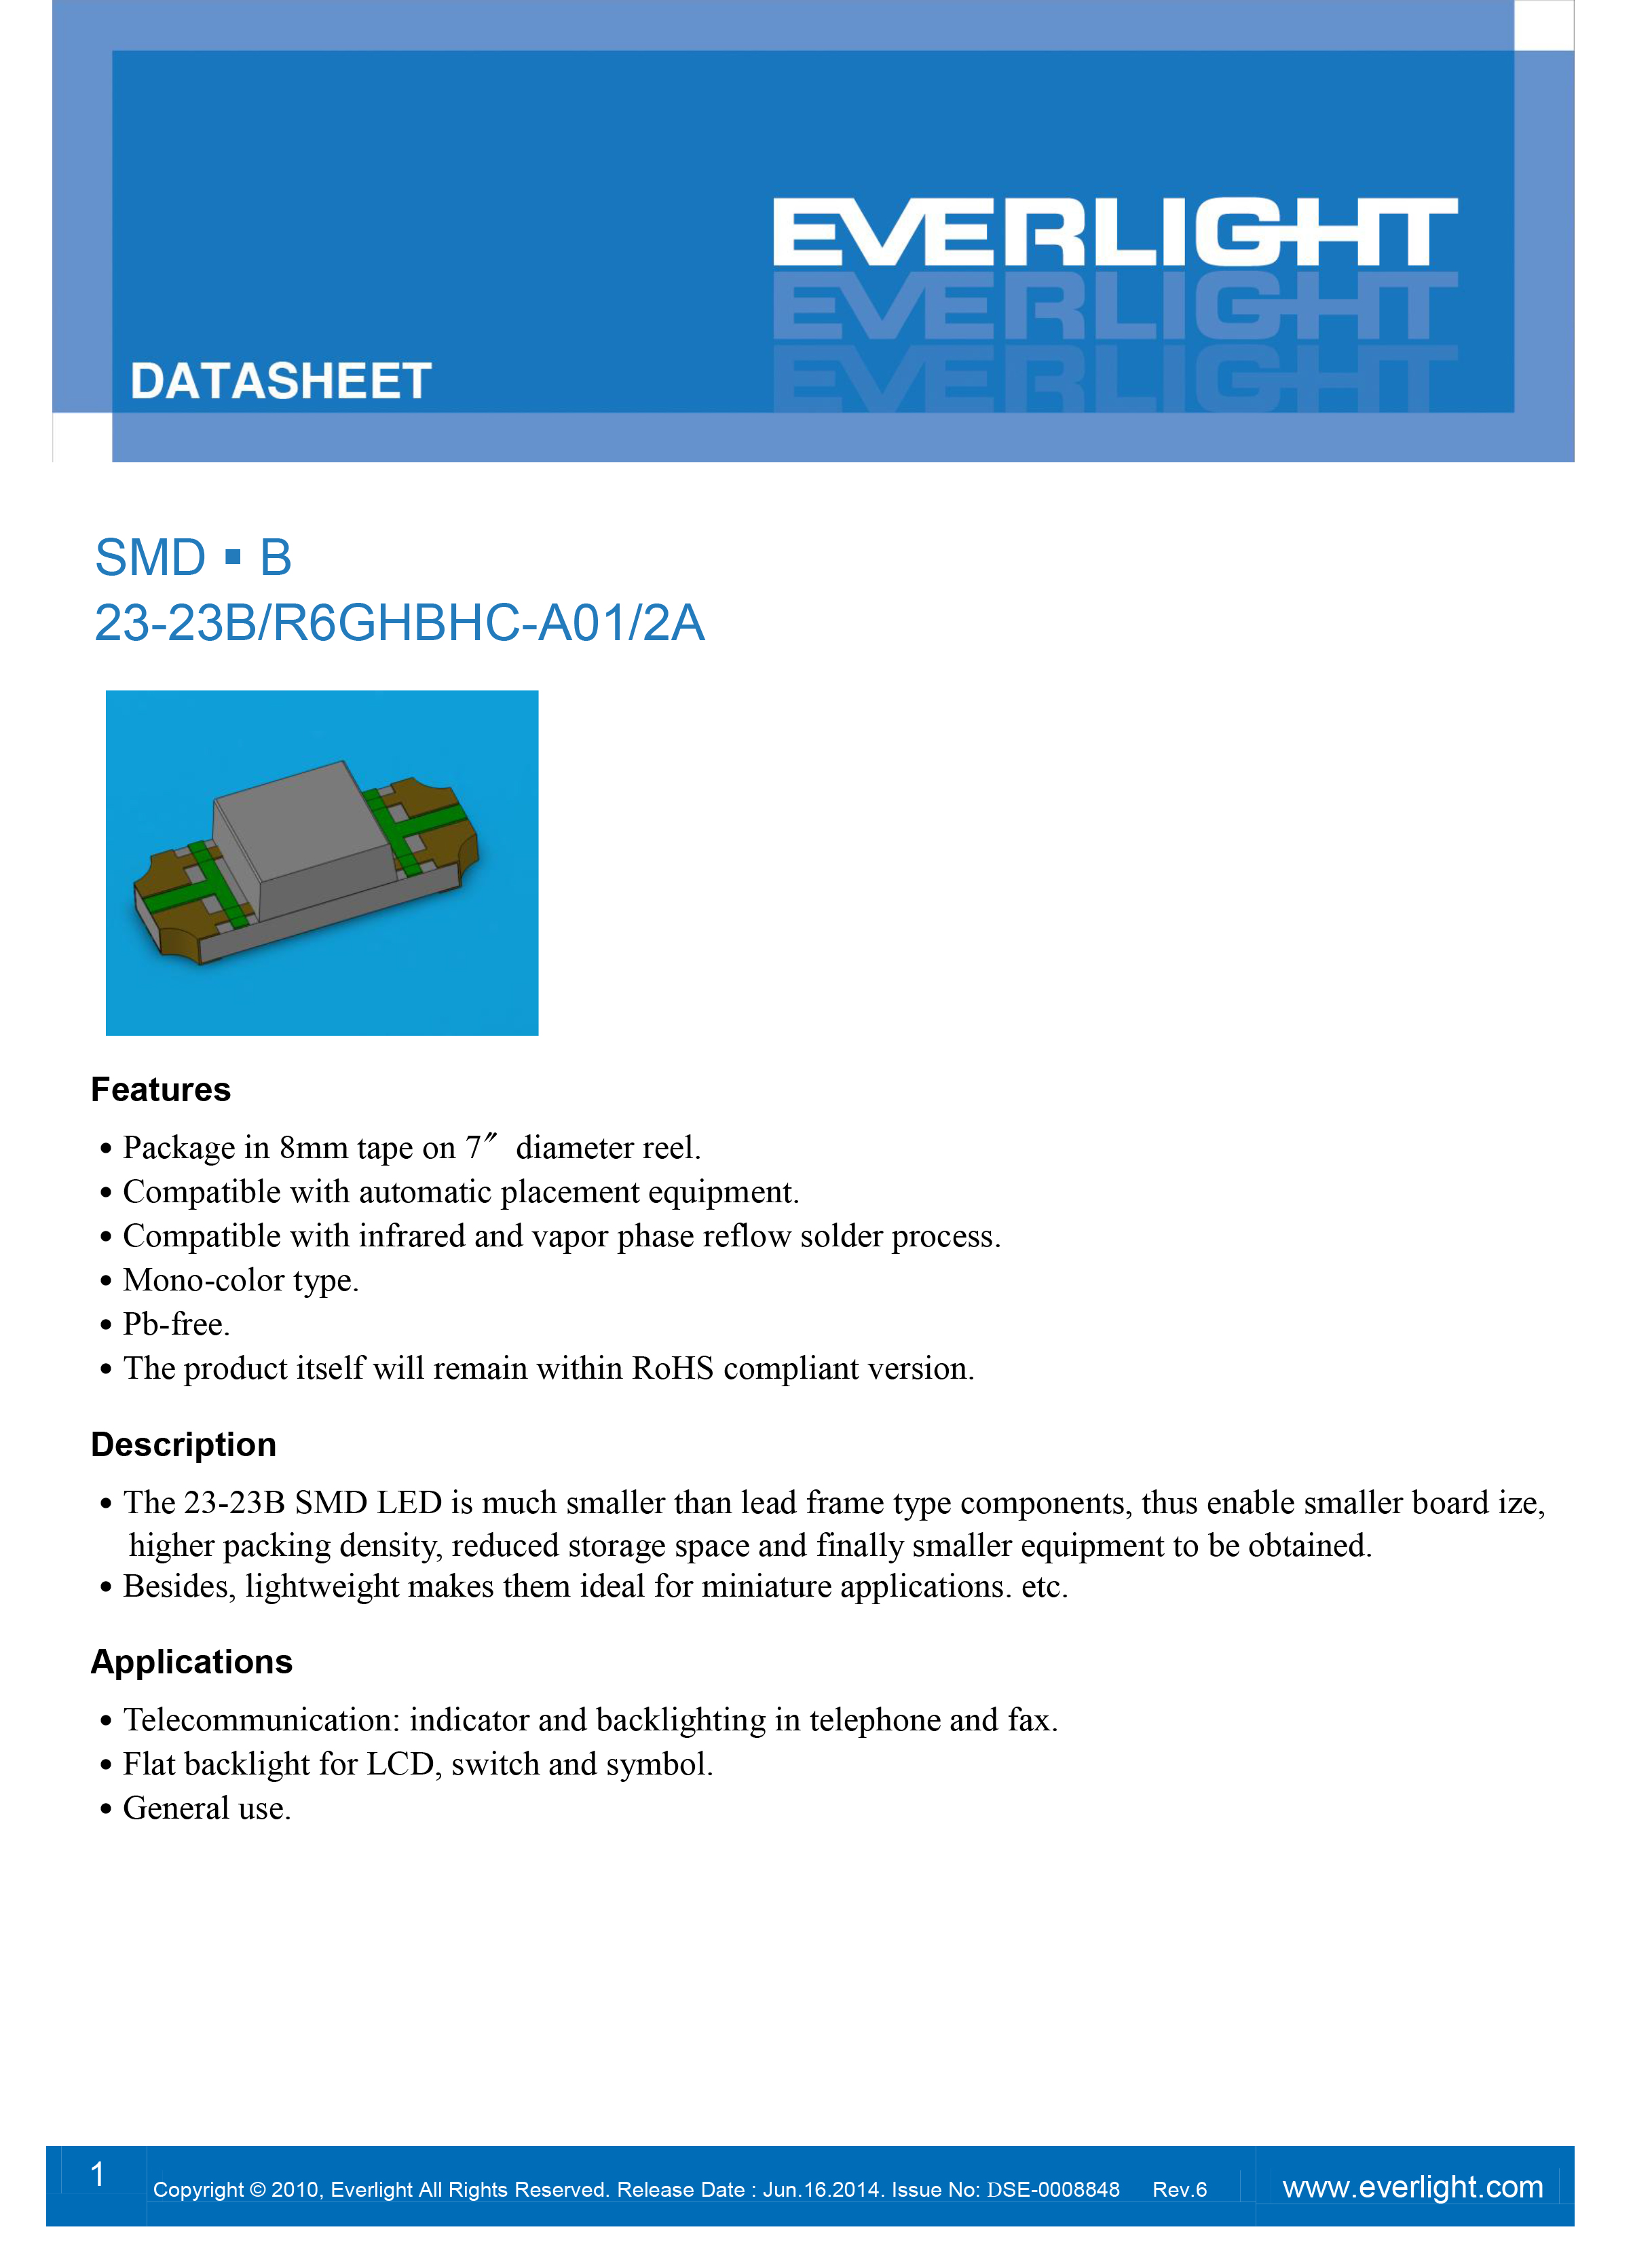 everlight led 23-23B-R6GHBHC-A01-2A Datasheet